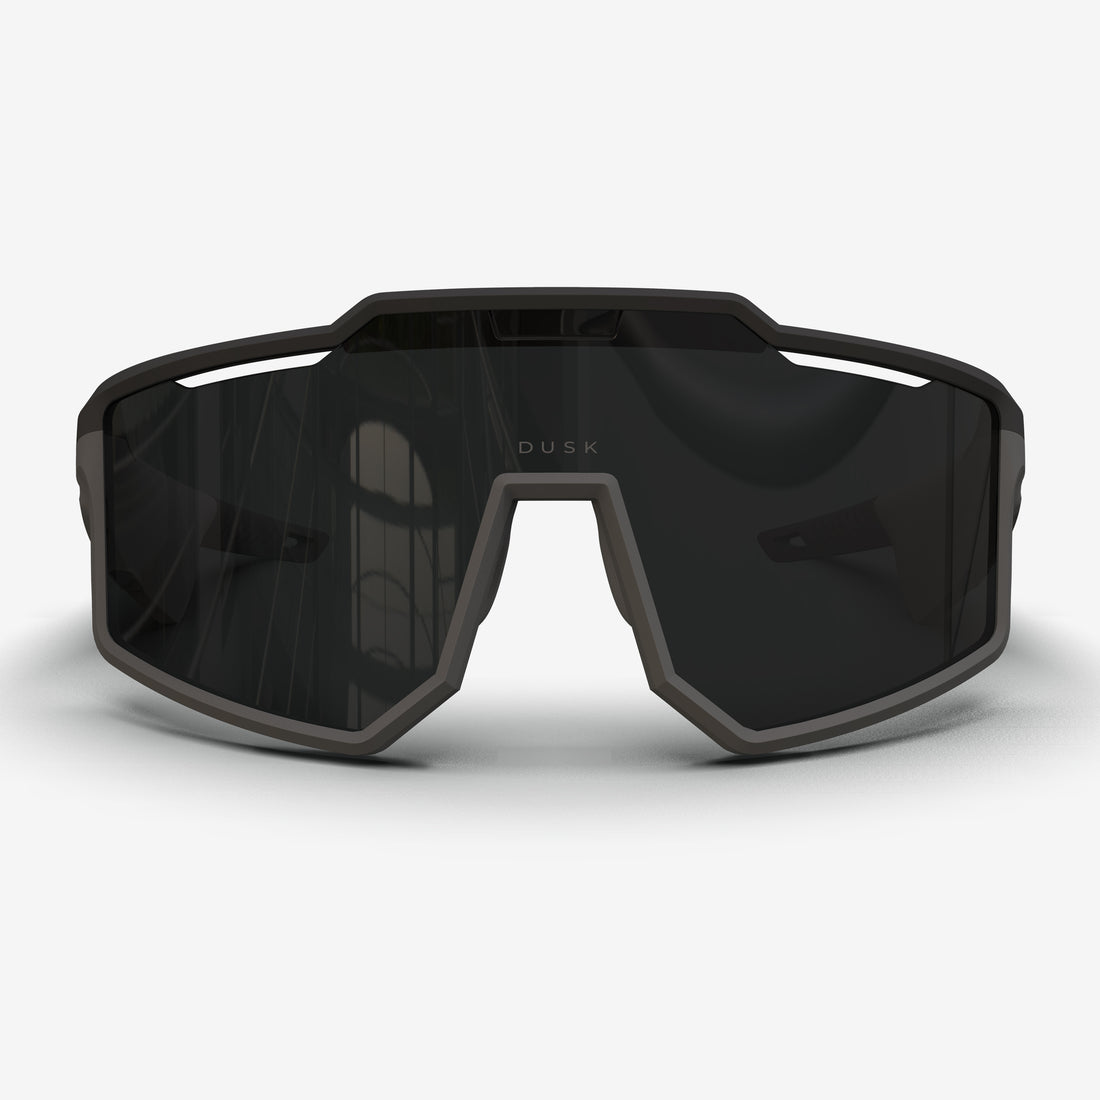 Ampere: Dusk Sports Sunglasses | App Enabled Smart Sunglasses | Adjustable Lenses, Smart Audio, Voice-assistant, Fast-Charging